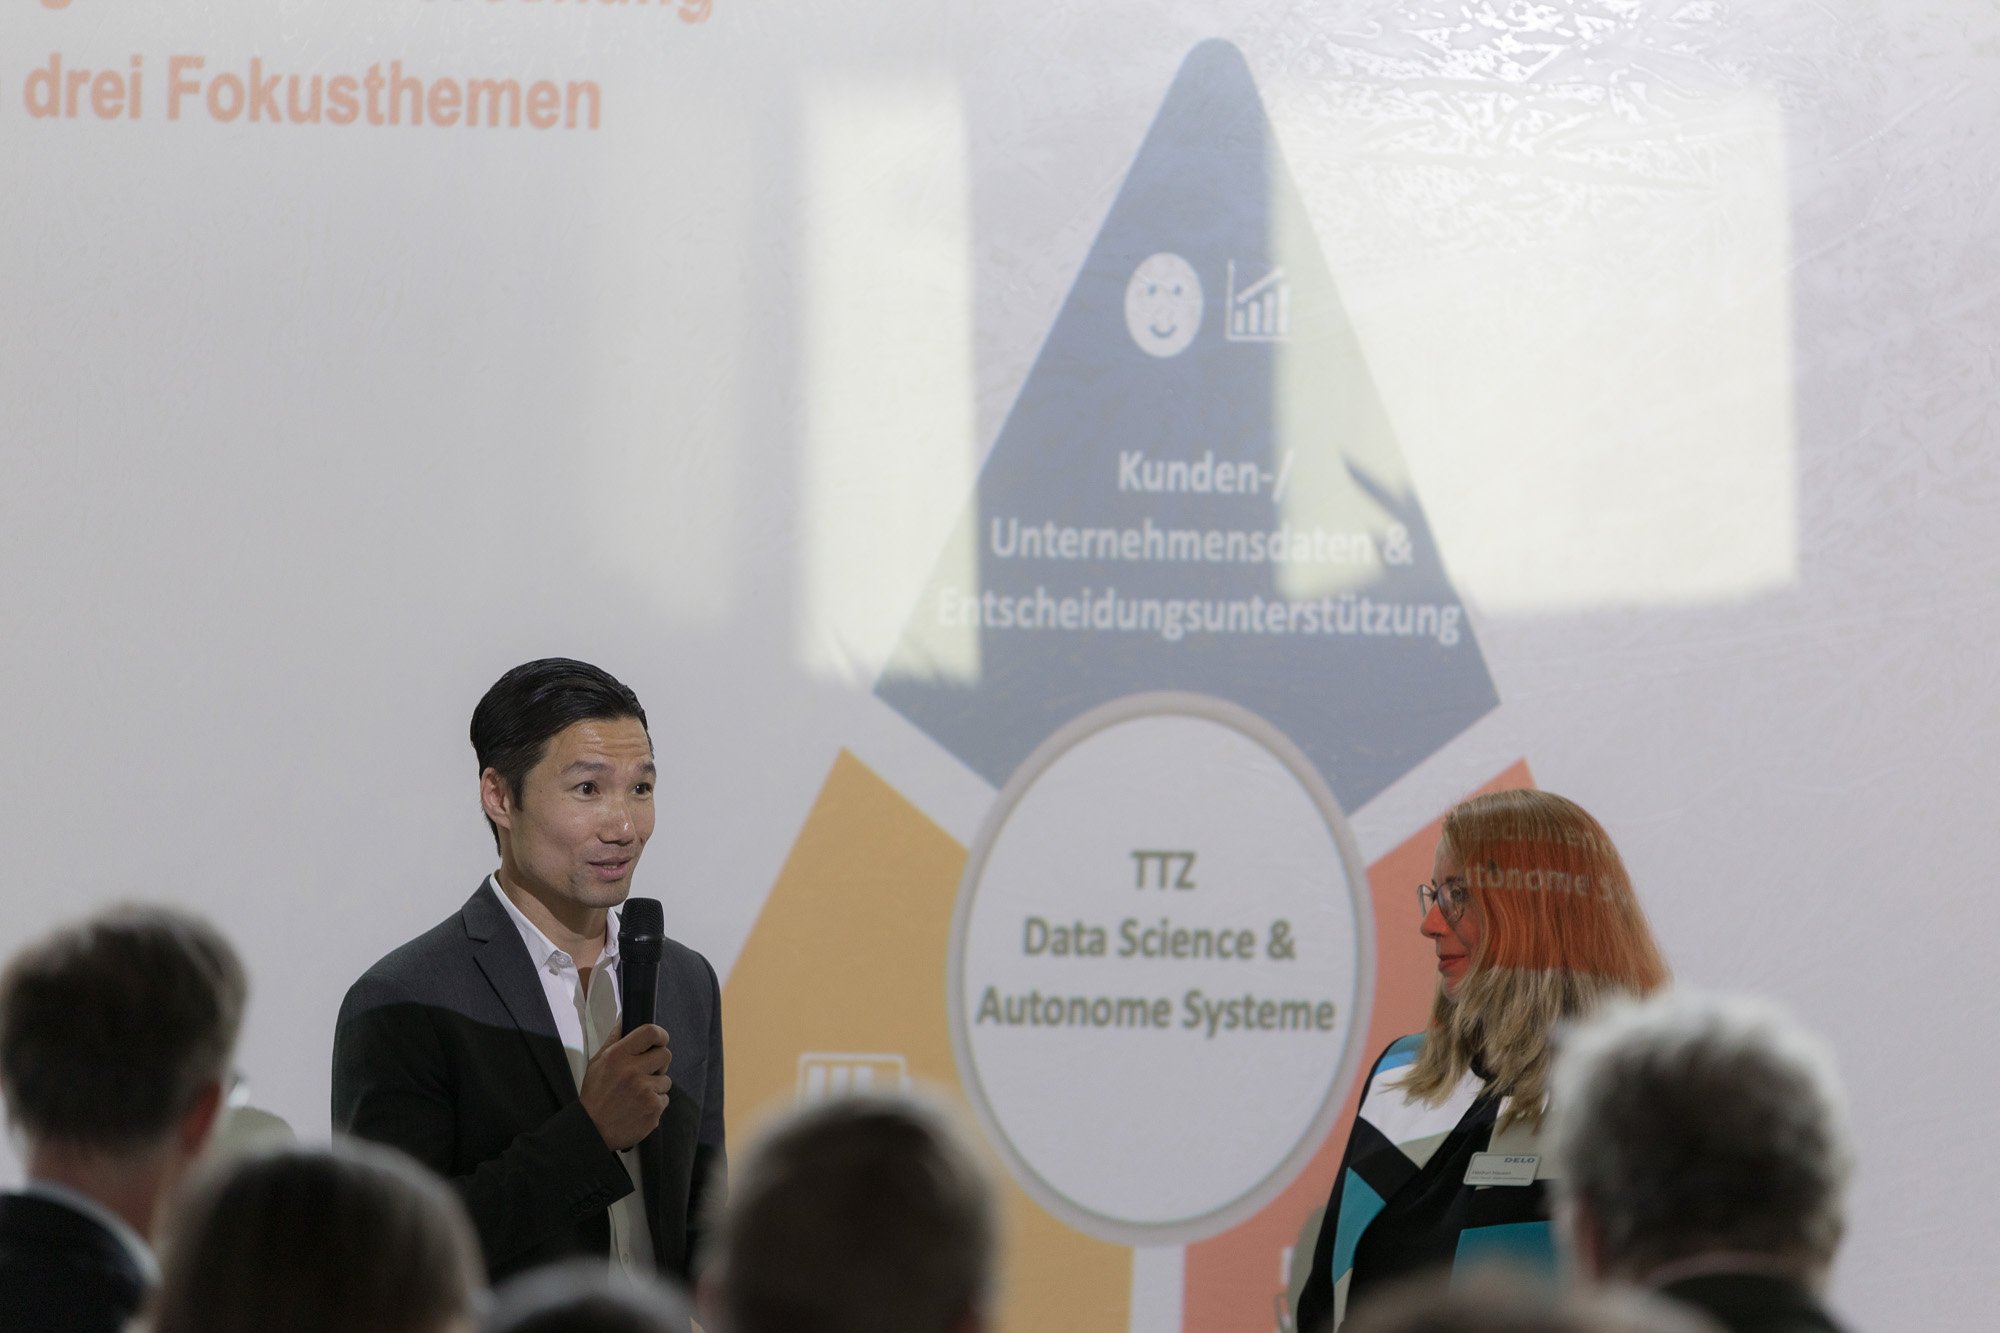 TTZ Data Science & Autonome Systeme: "Innovation-Walk" - Prof. Dr. Jianing Zhang und Heidrun Hausen (Delo)